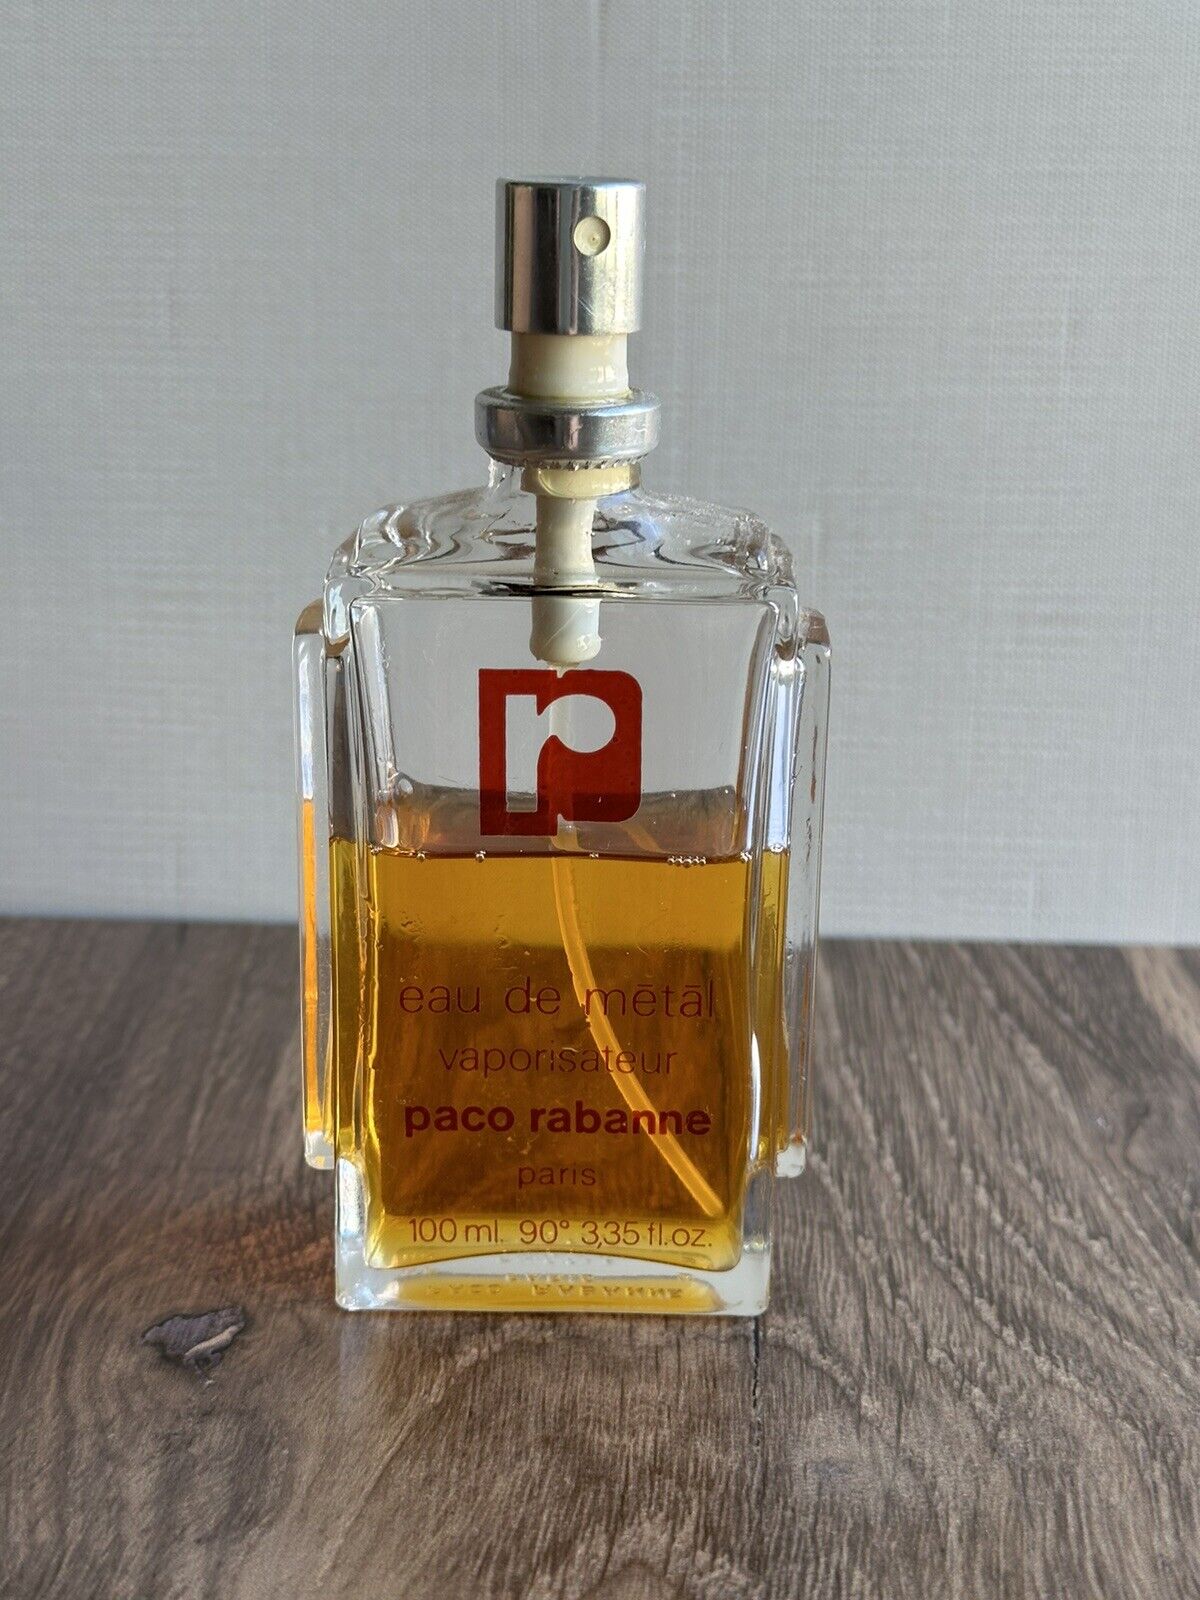 Paco Rabanne Eau de Metal Women's Vintage Fragrance. 100 ml 3.35 fl. oz